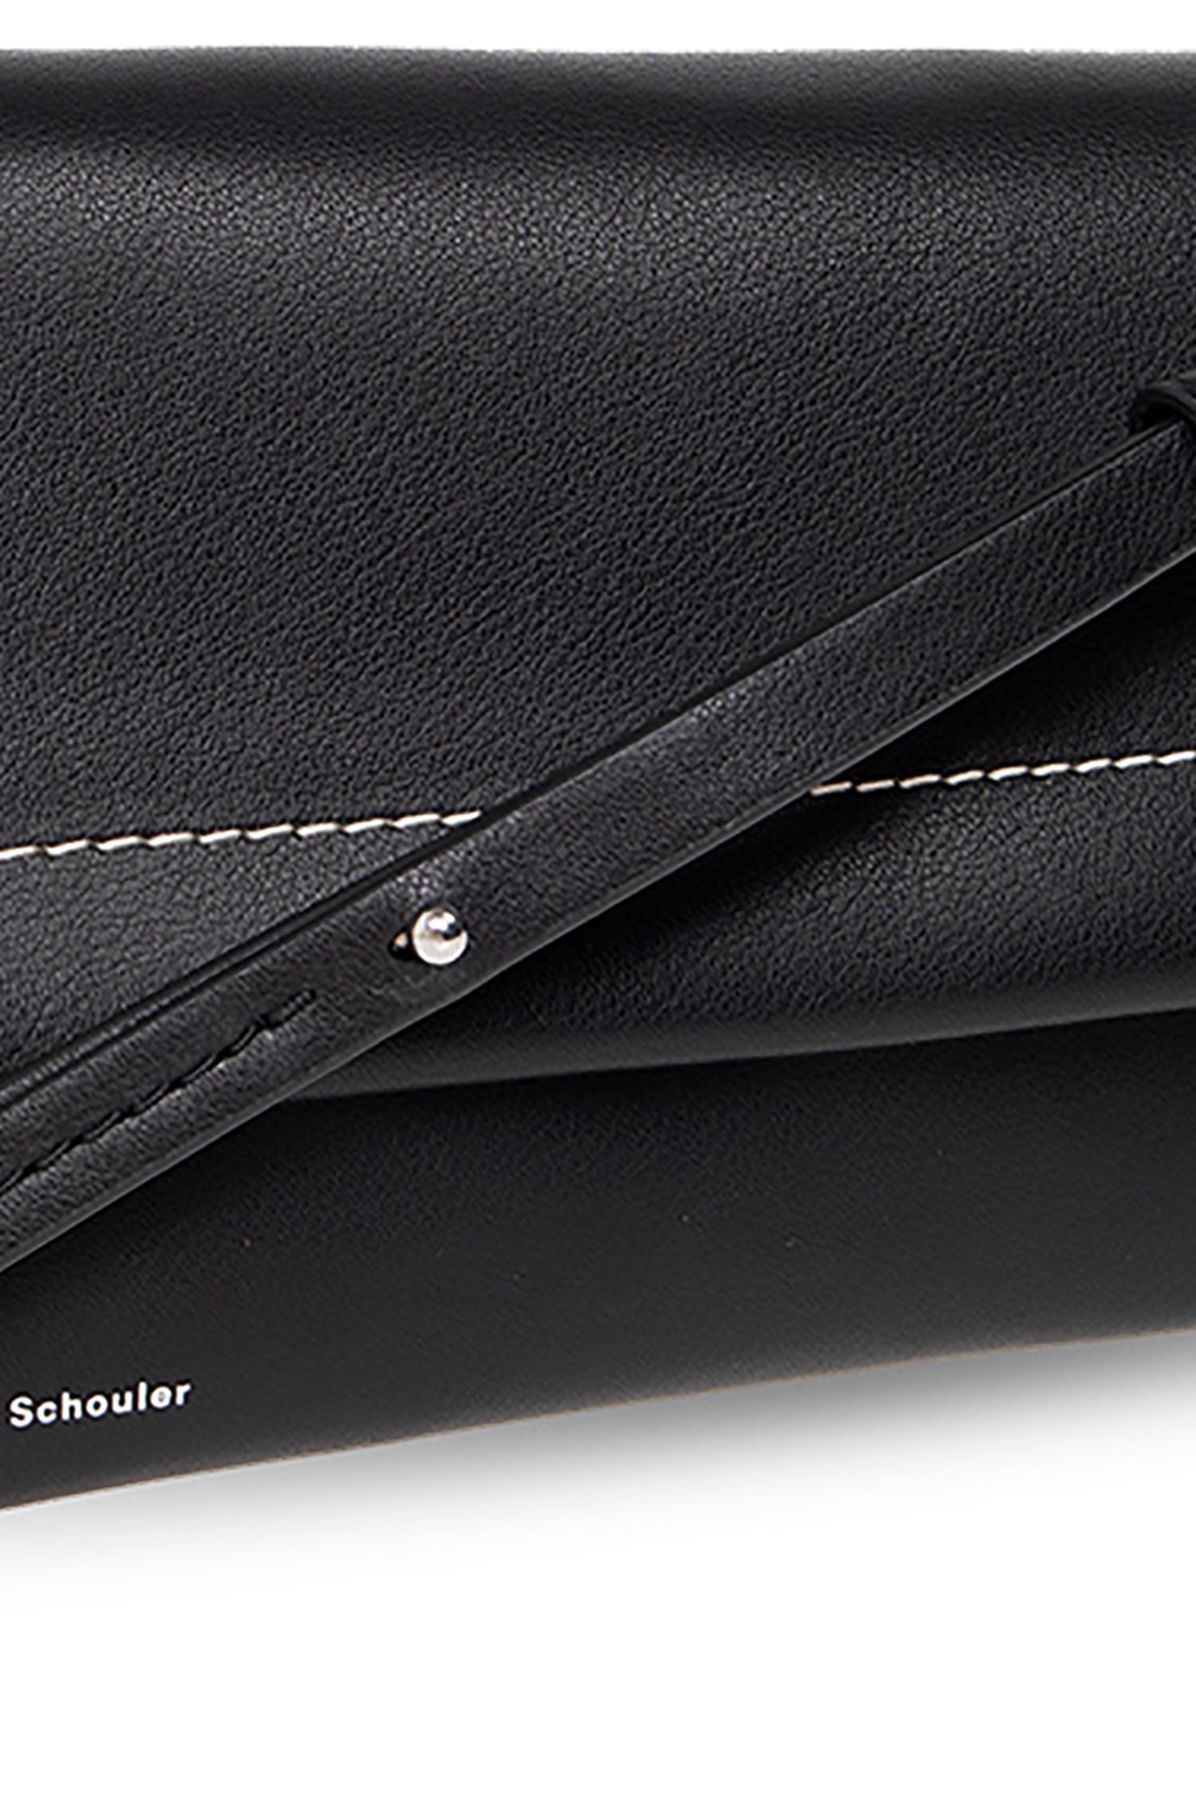 proenza schouler white label Accordion Small shoulder bag